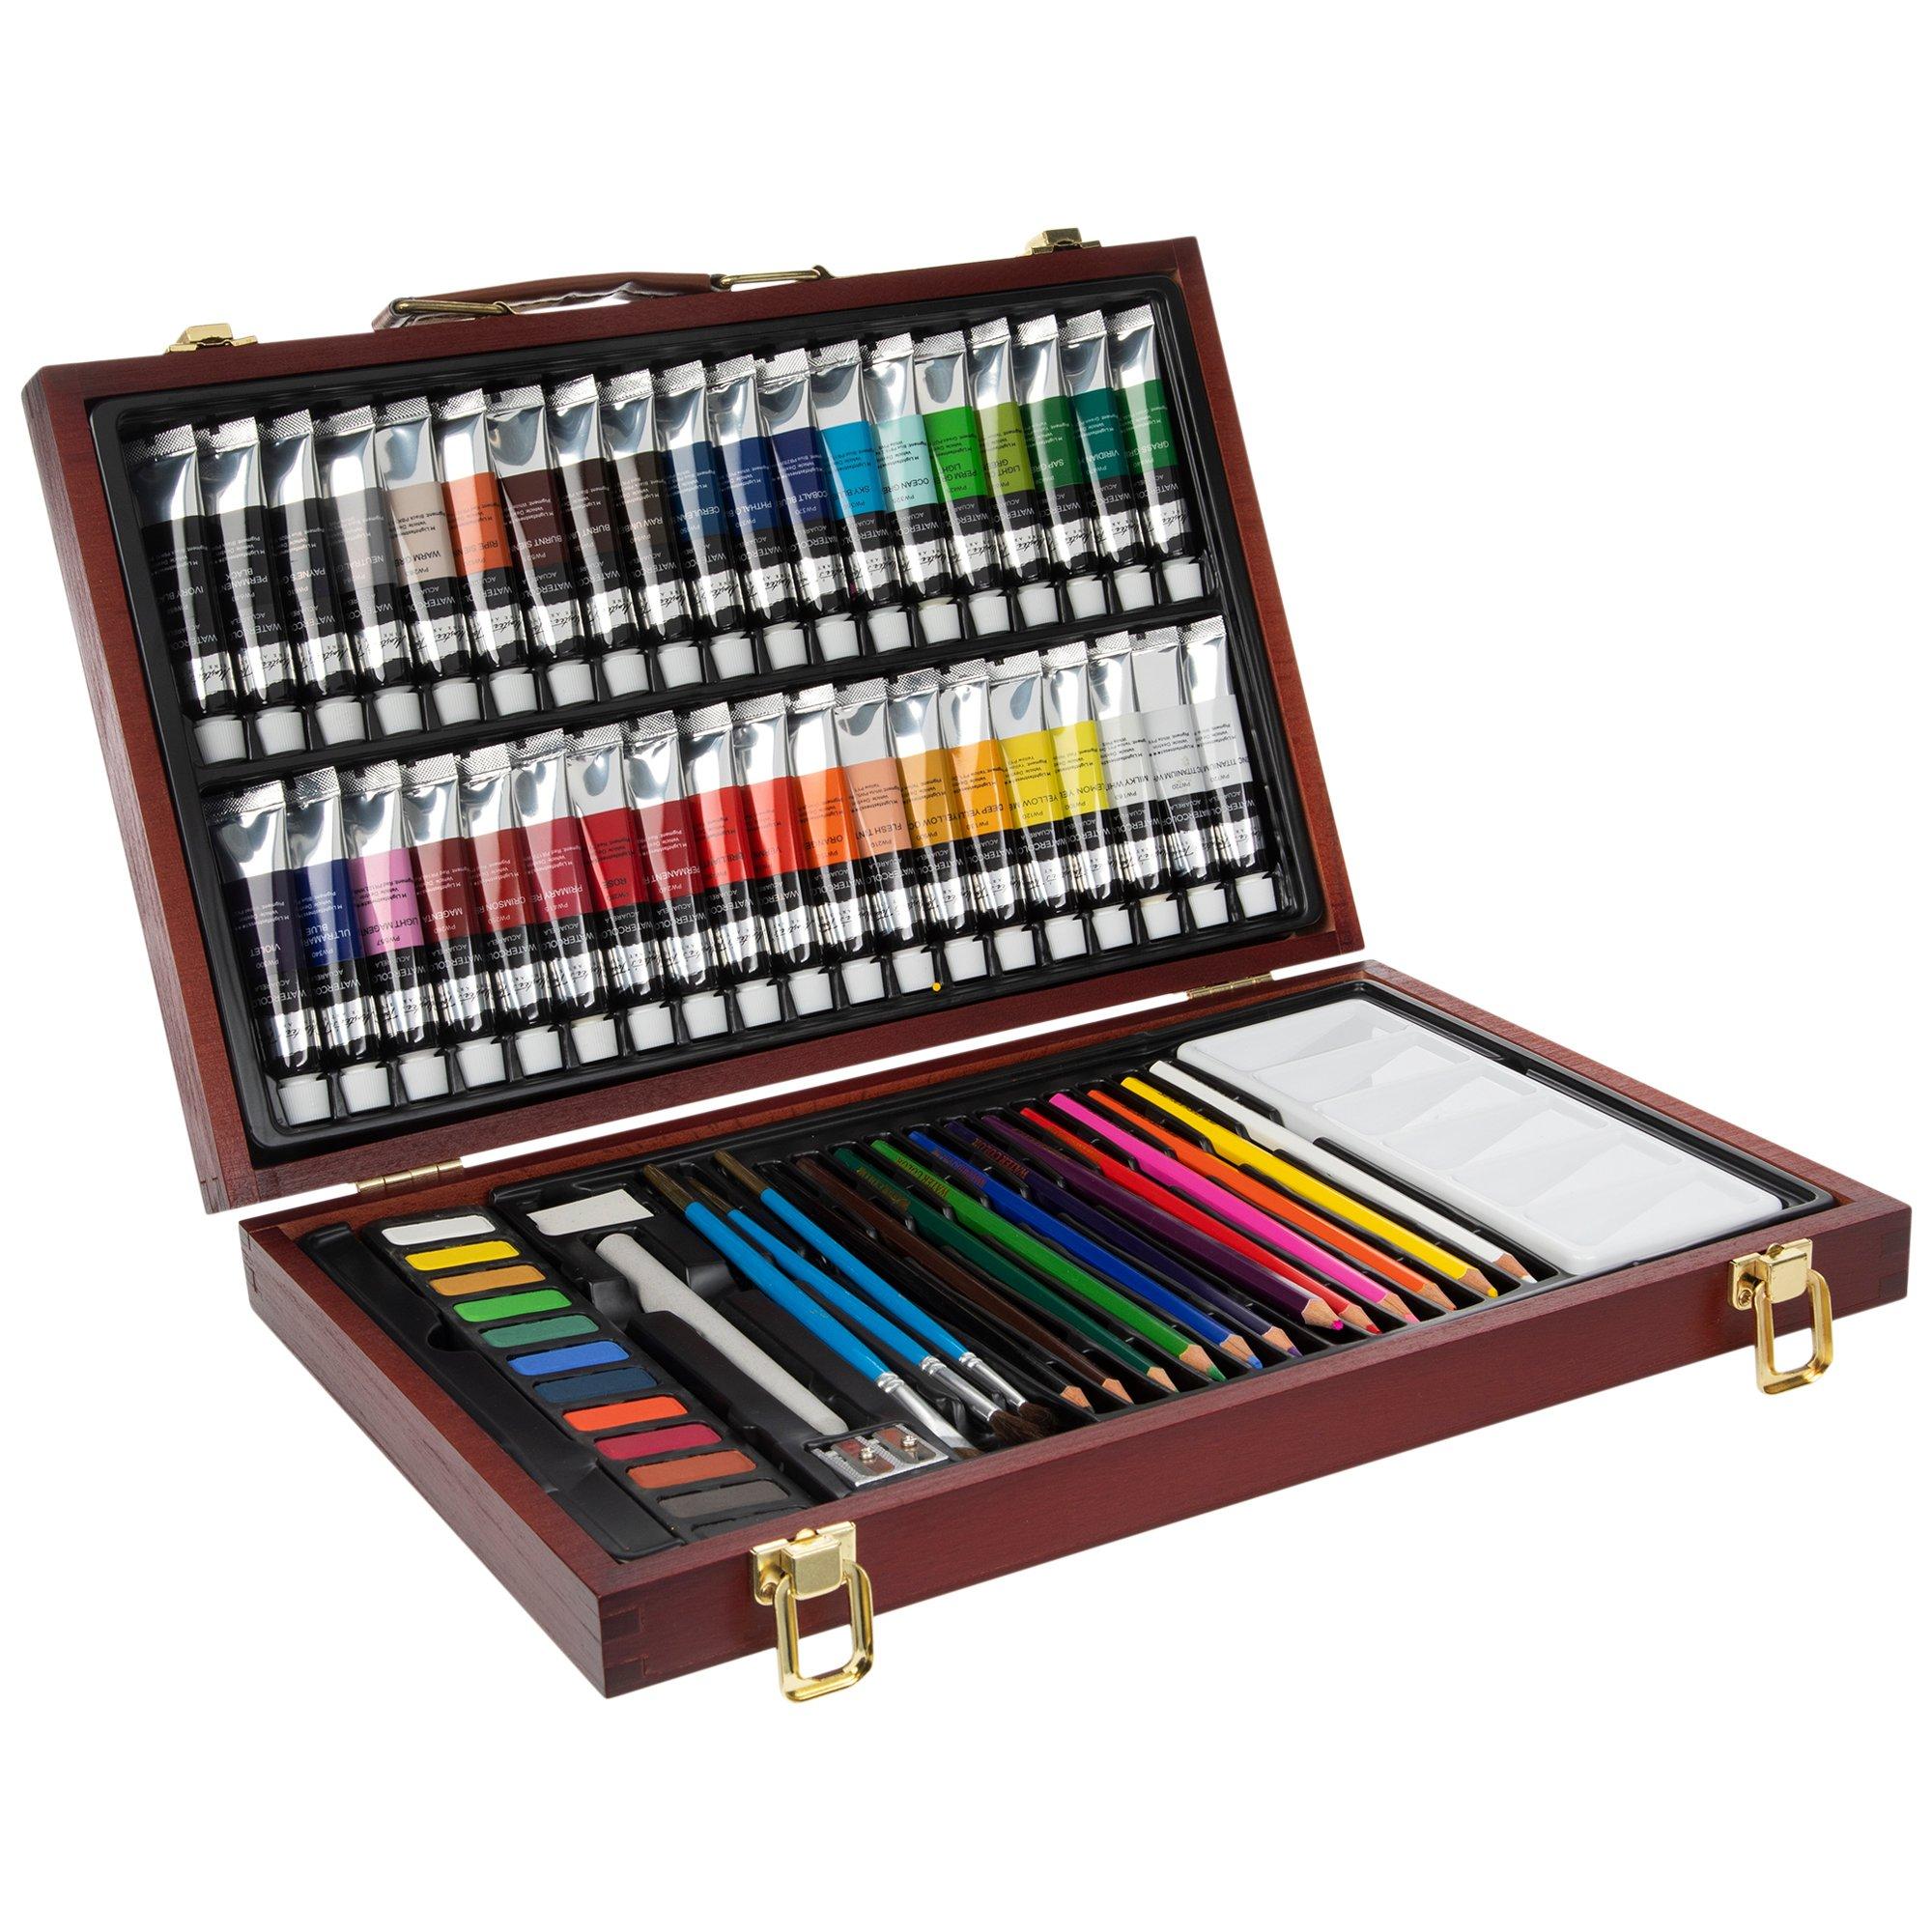 Cricut Watercolor Markers & Brush - 9 Piece Set, Hobby Lobby